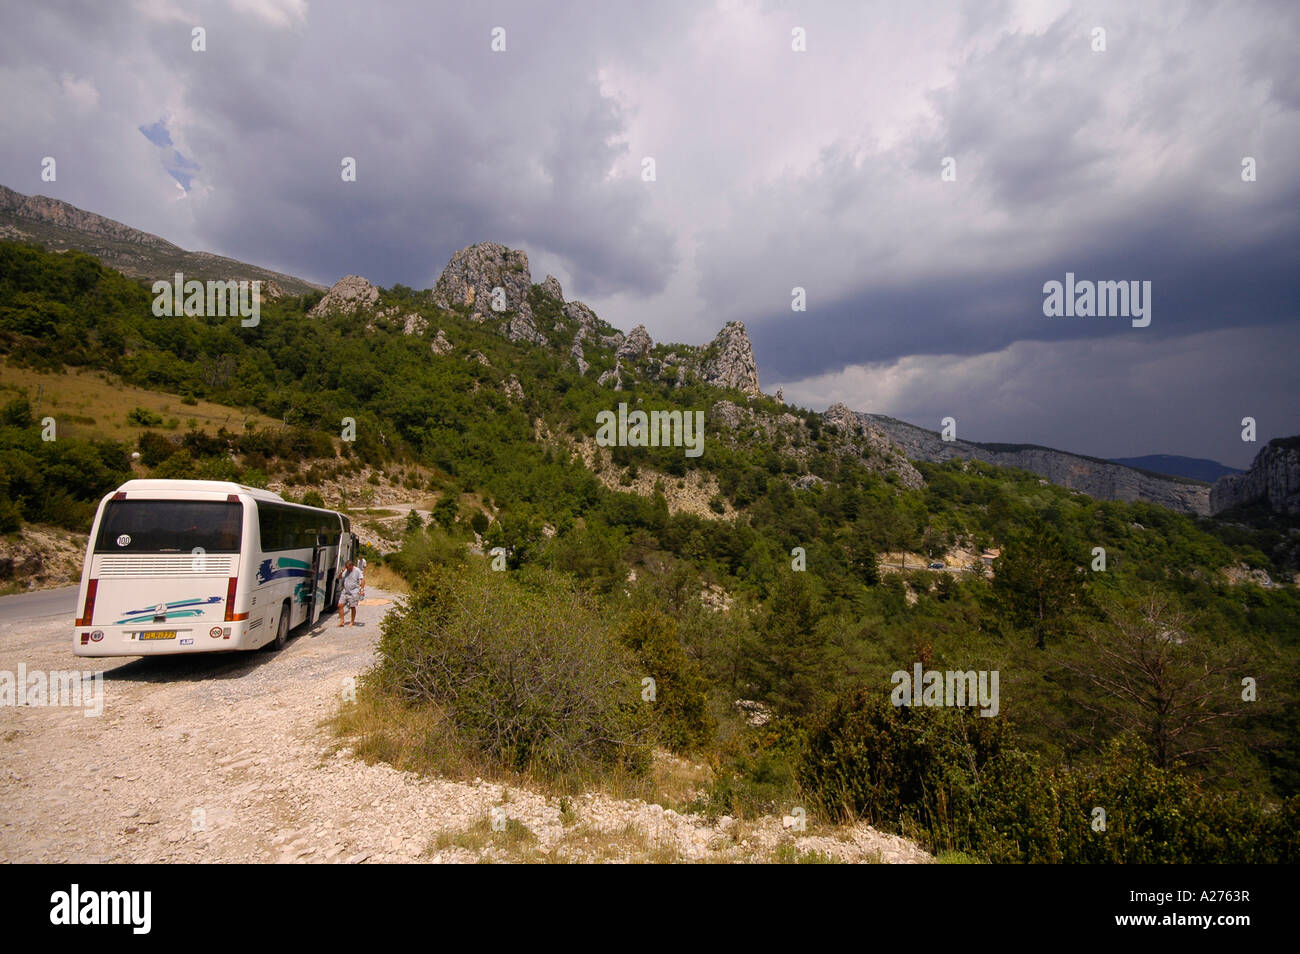 Bus parking close to lookout point, Verdon Canyon, George du Verdon, France, Europe Stock Photo